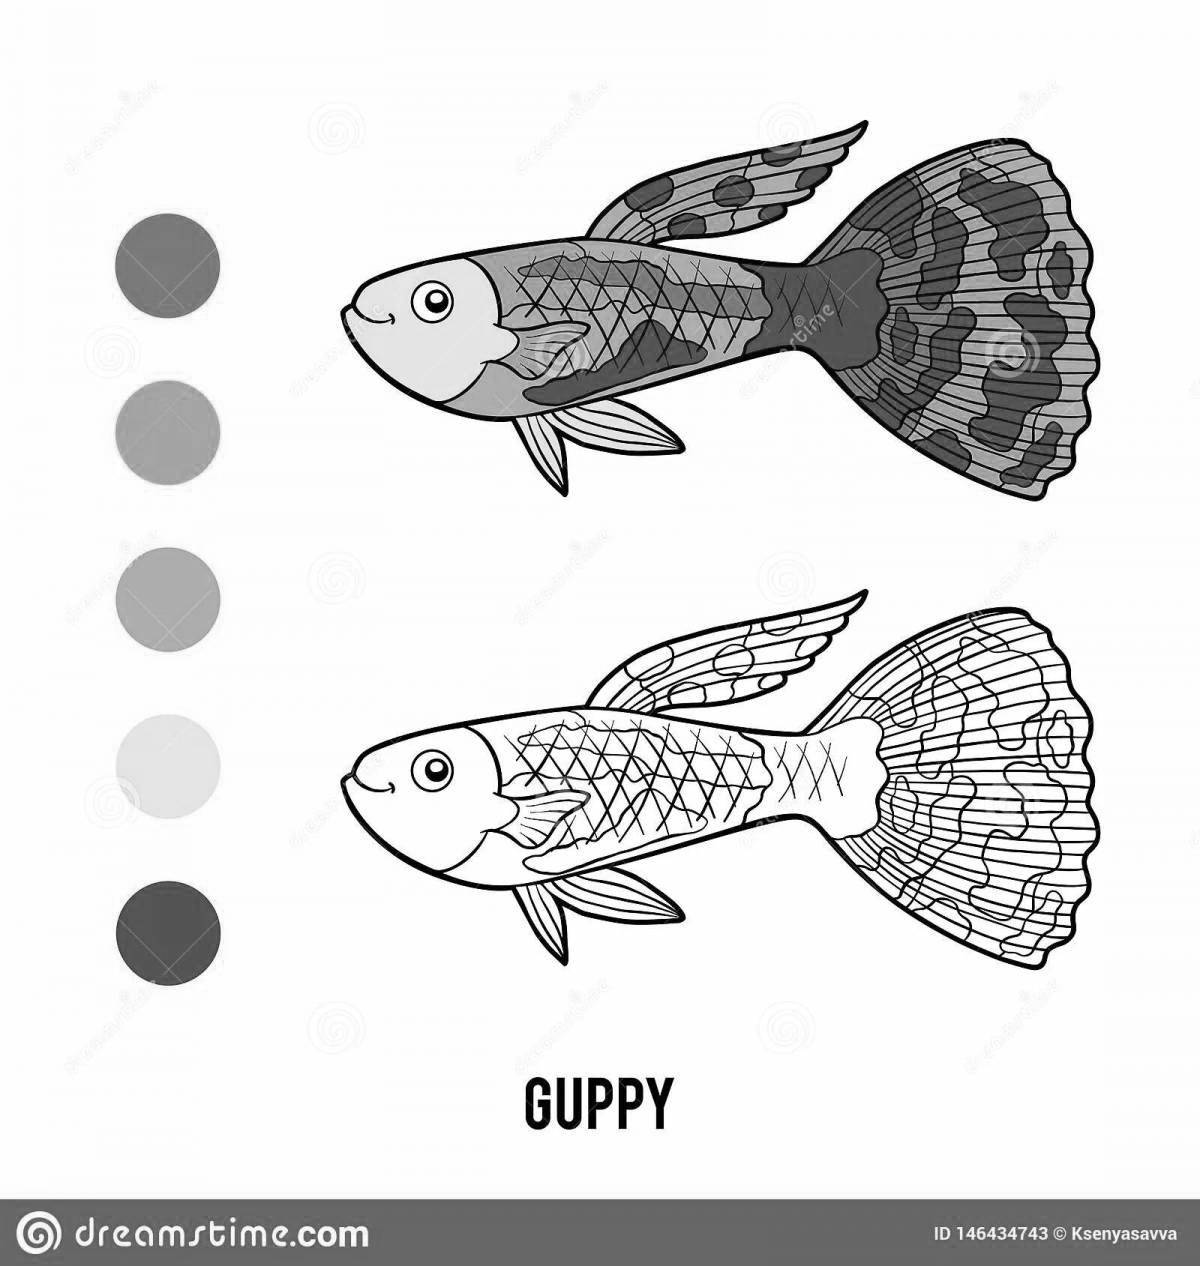 Guppy fish #5